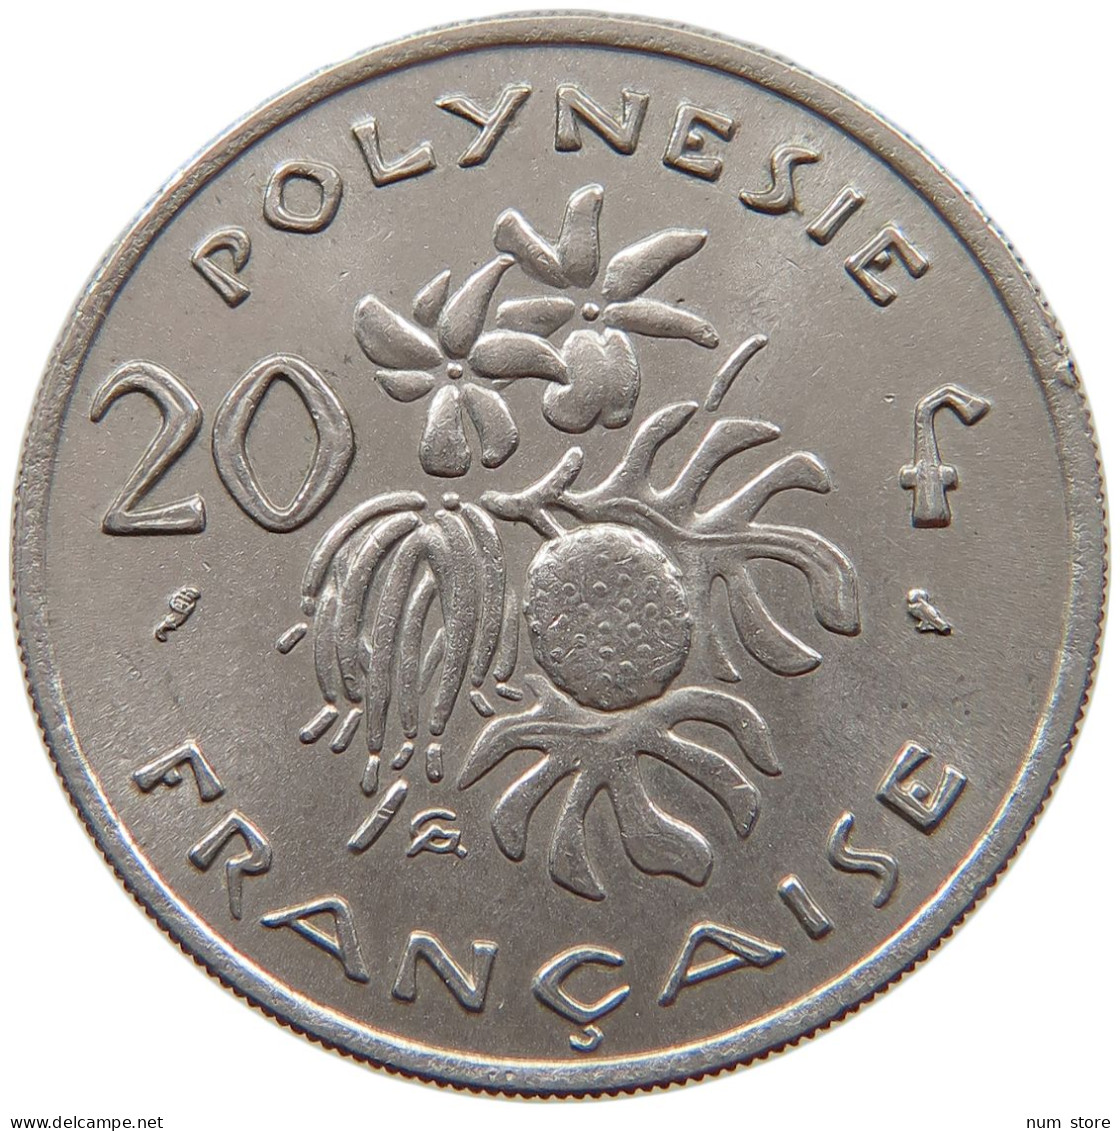 POLYNESIA 20 FRANCS 1967  #c064 0253 - Französisch-Polynesien